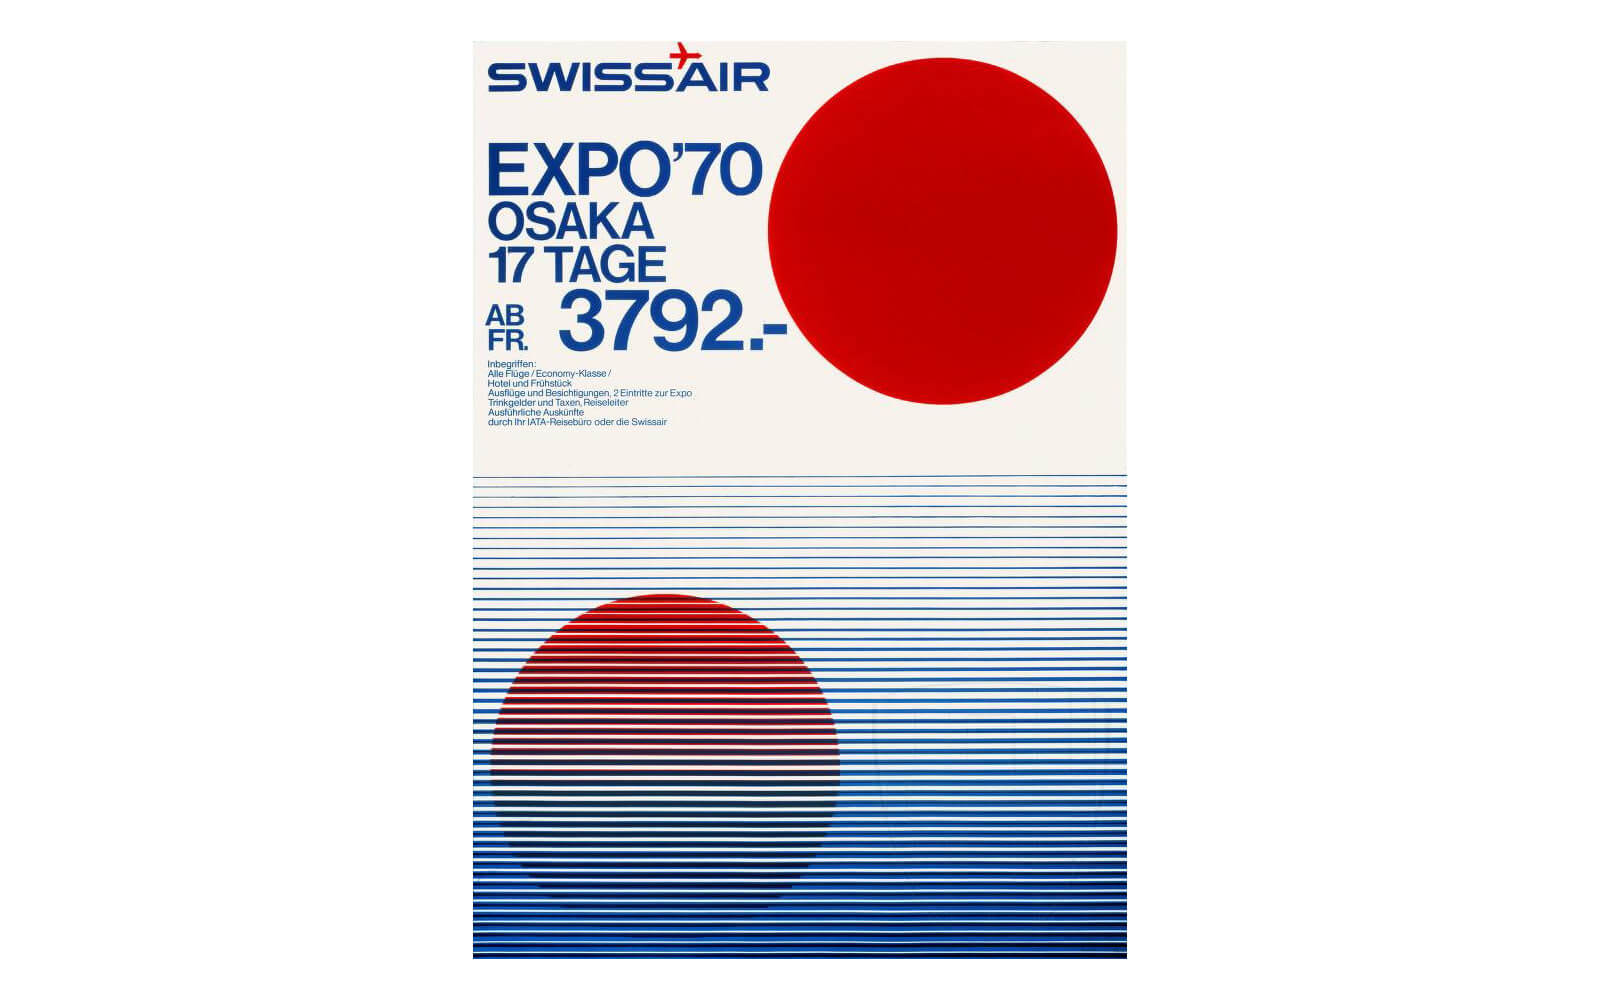 Vintage Swissair Poster